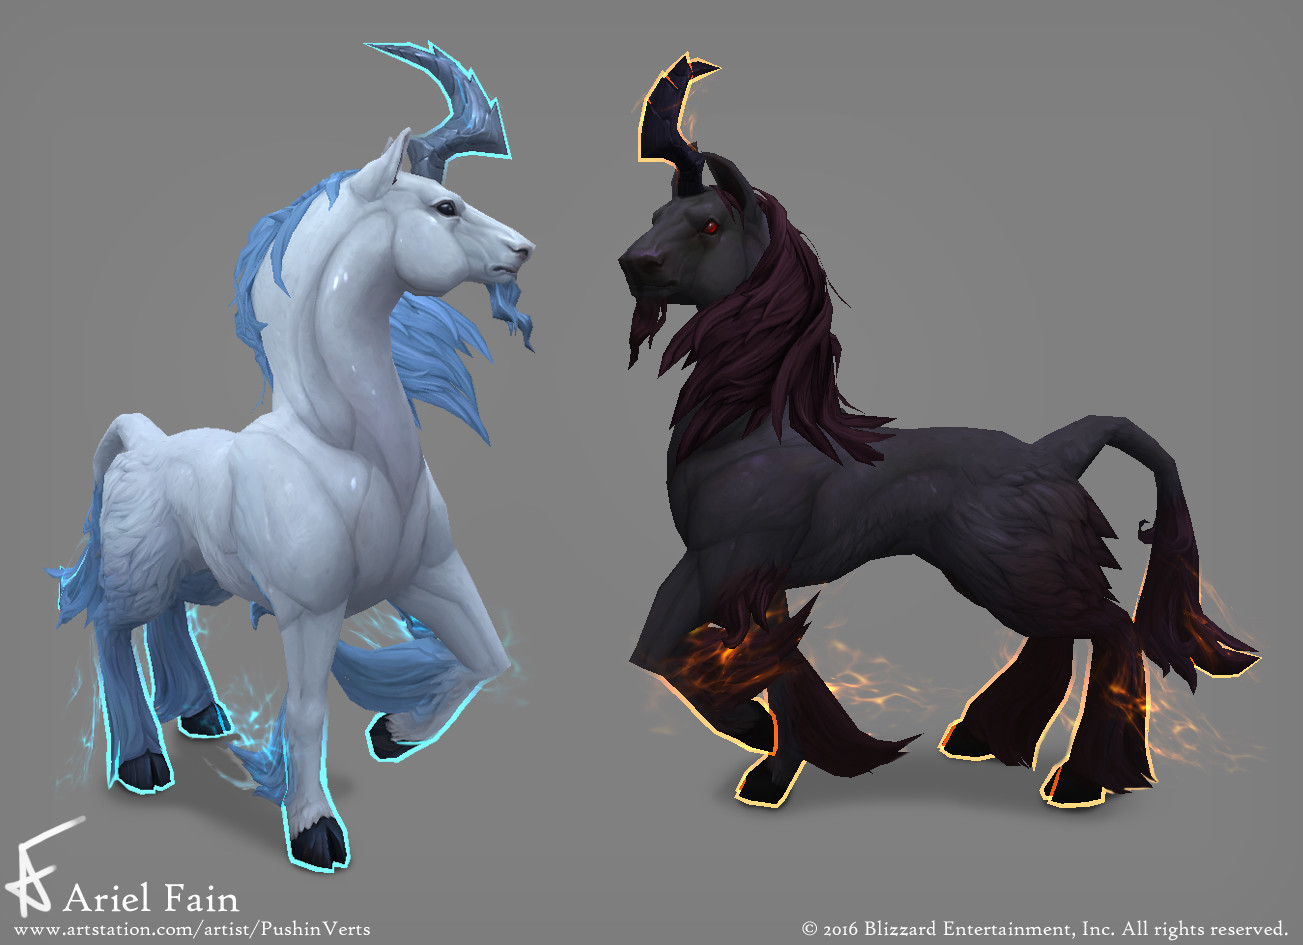 ariel-fain-not-unicorn